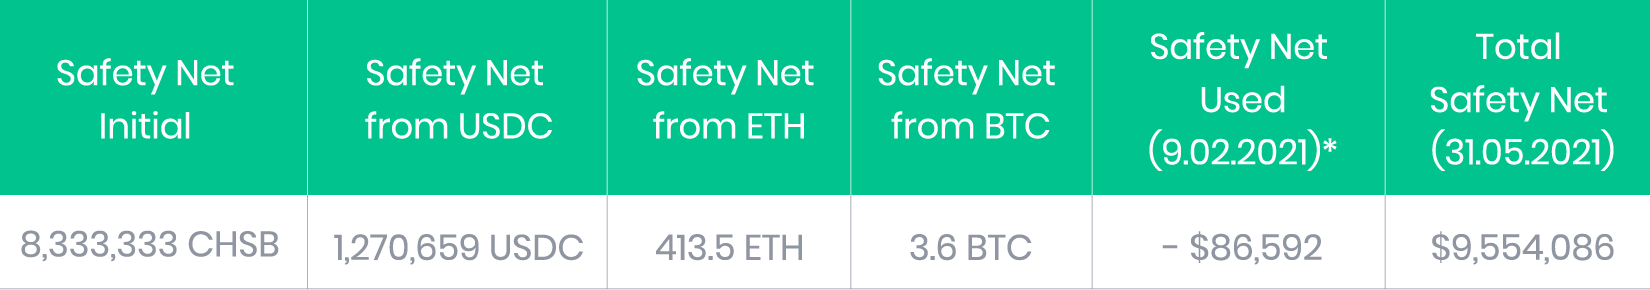 Safety Net results 